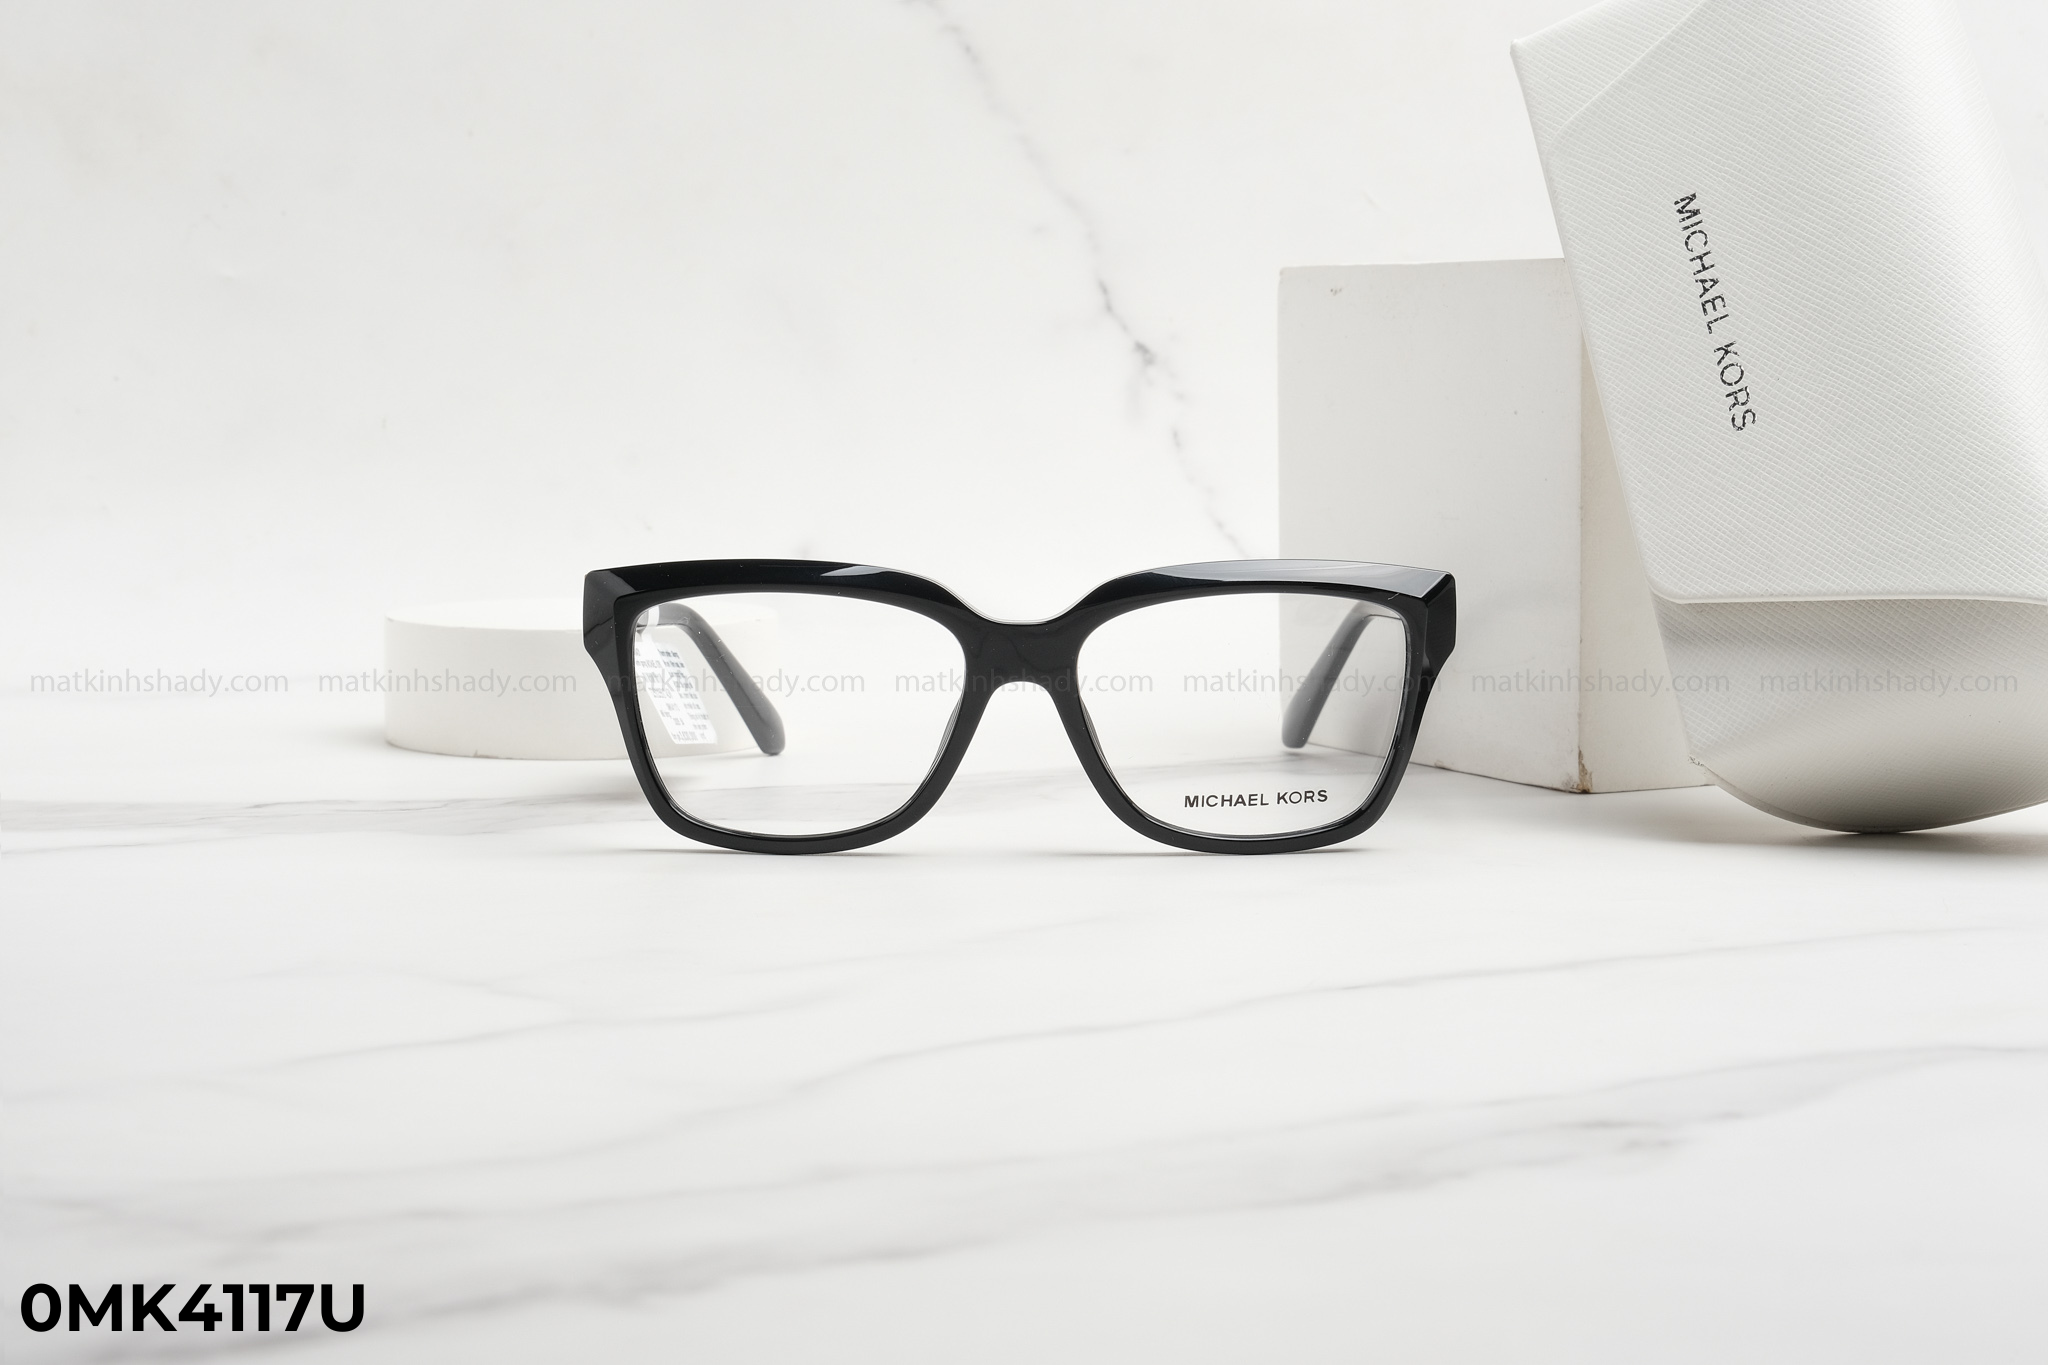  Michael Kors Eyewear - Glasses - 0MK4117U 